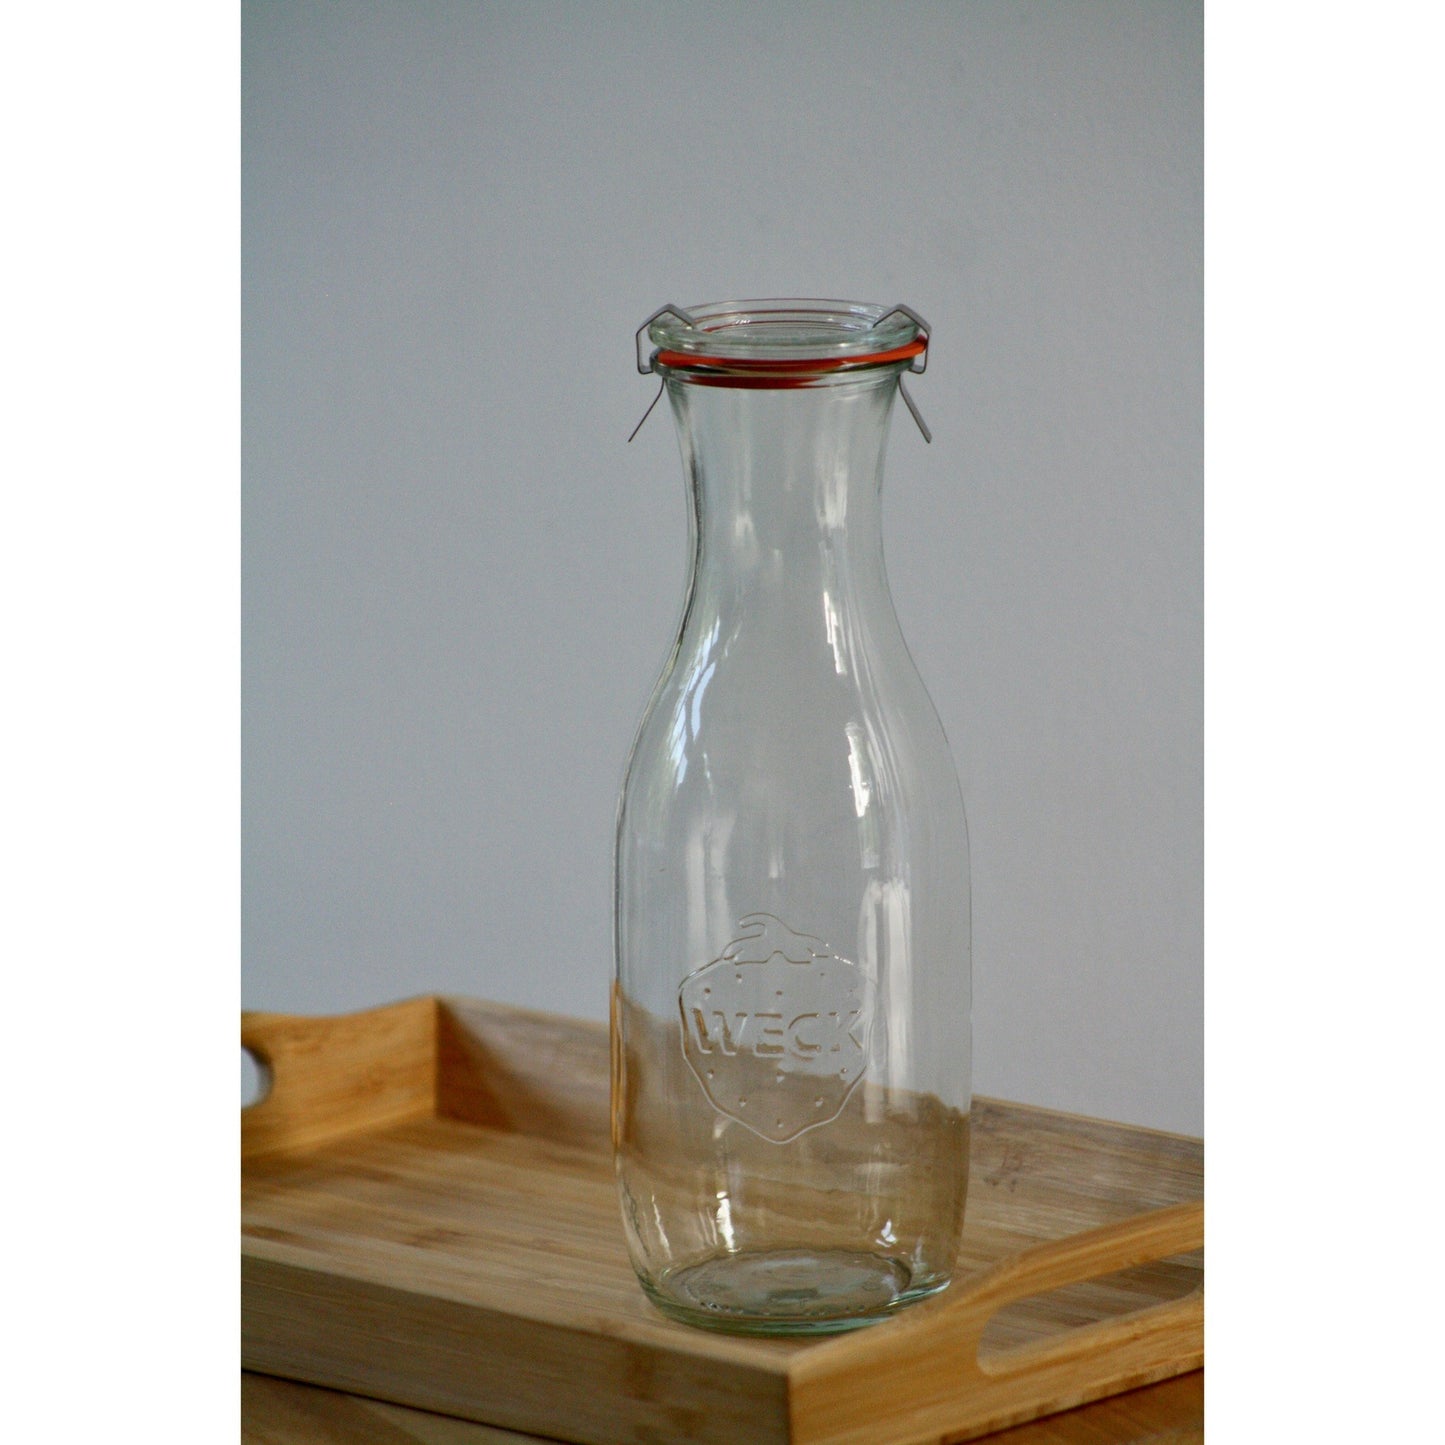 766 - 1 L Juice Jar (Set of 3) - Weck Jars